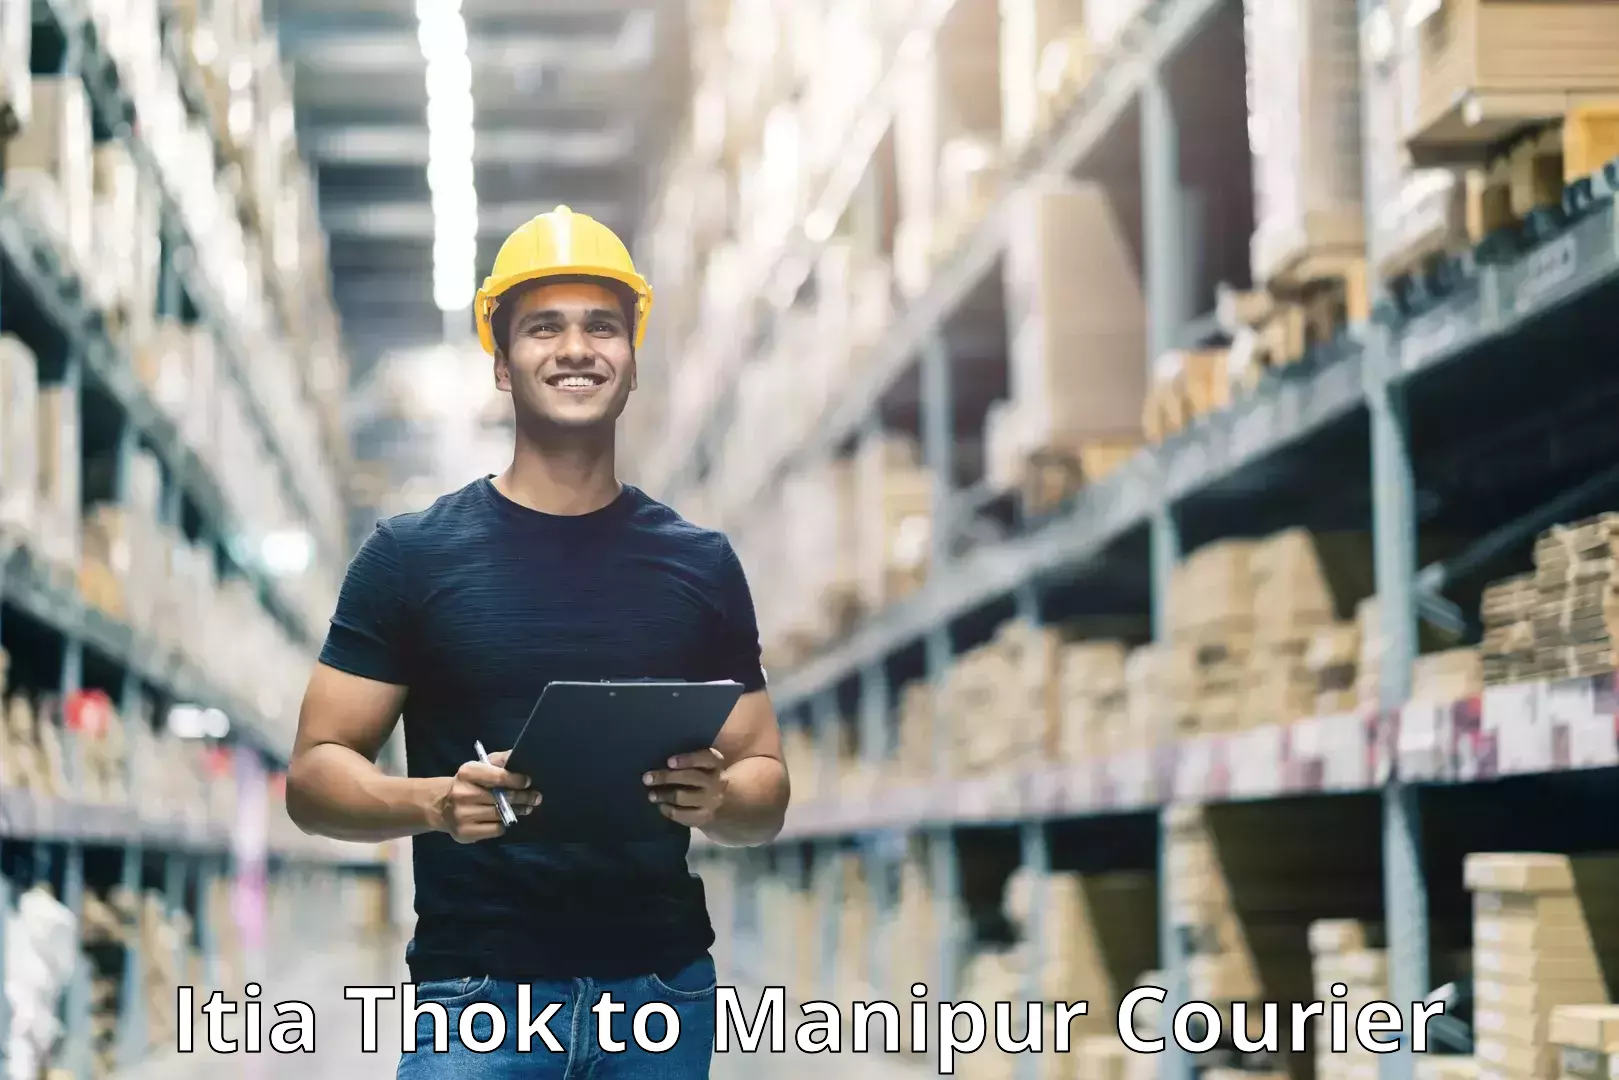 High-efficiency logistics Itia Thok to Manipur